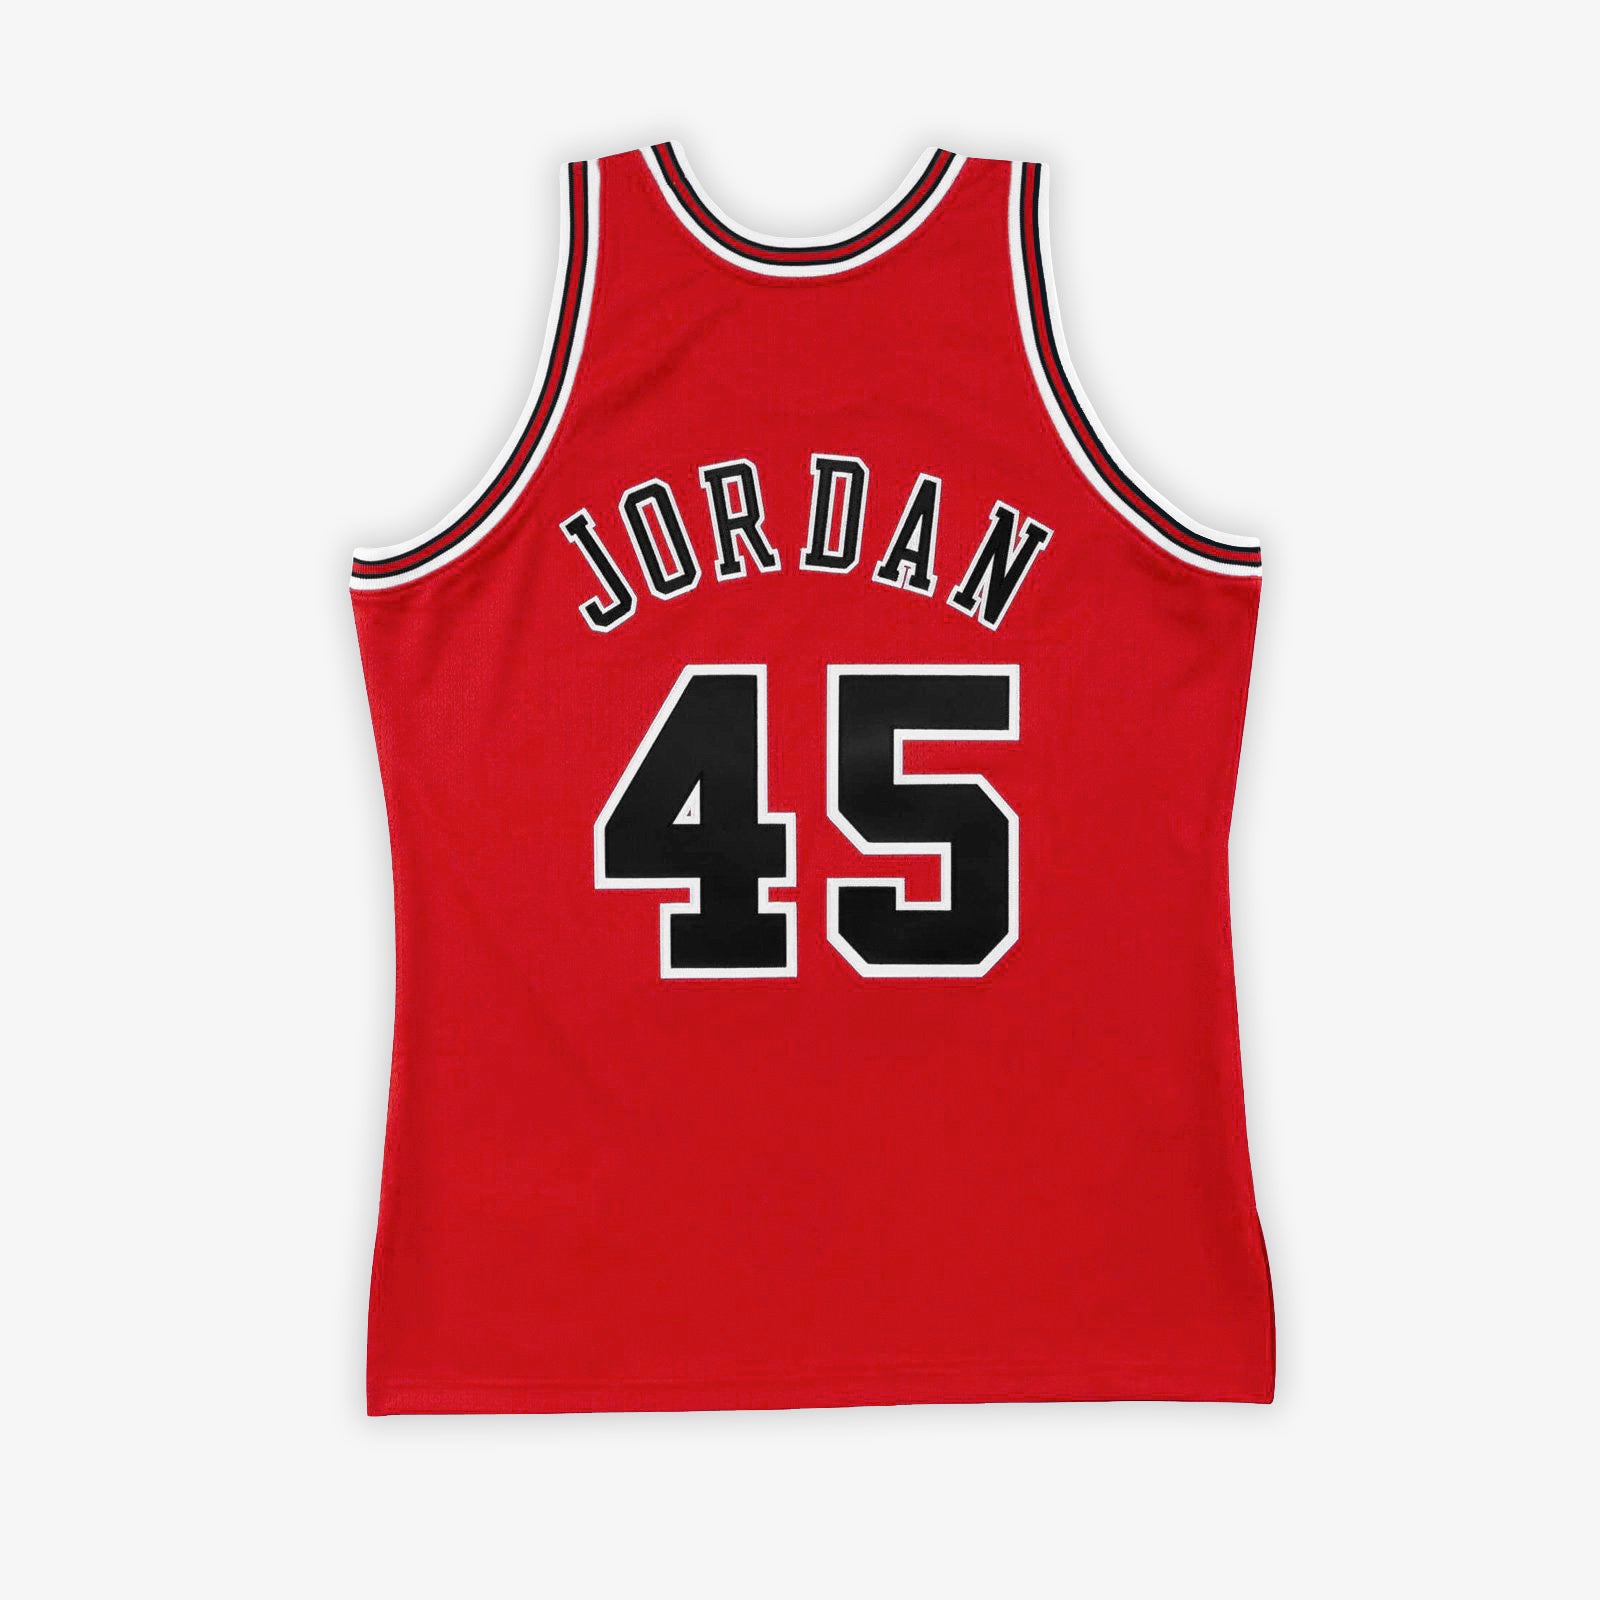 Michael Jordan Chicago Bulls jersey size XXL color India